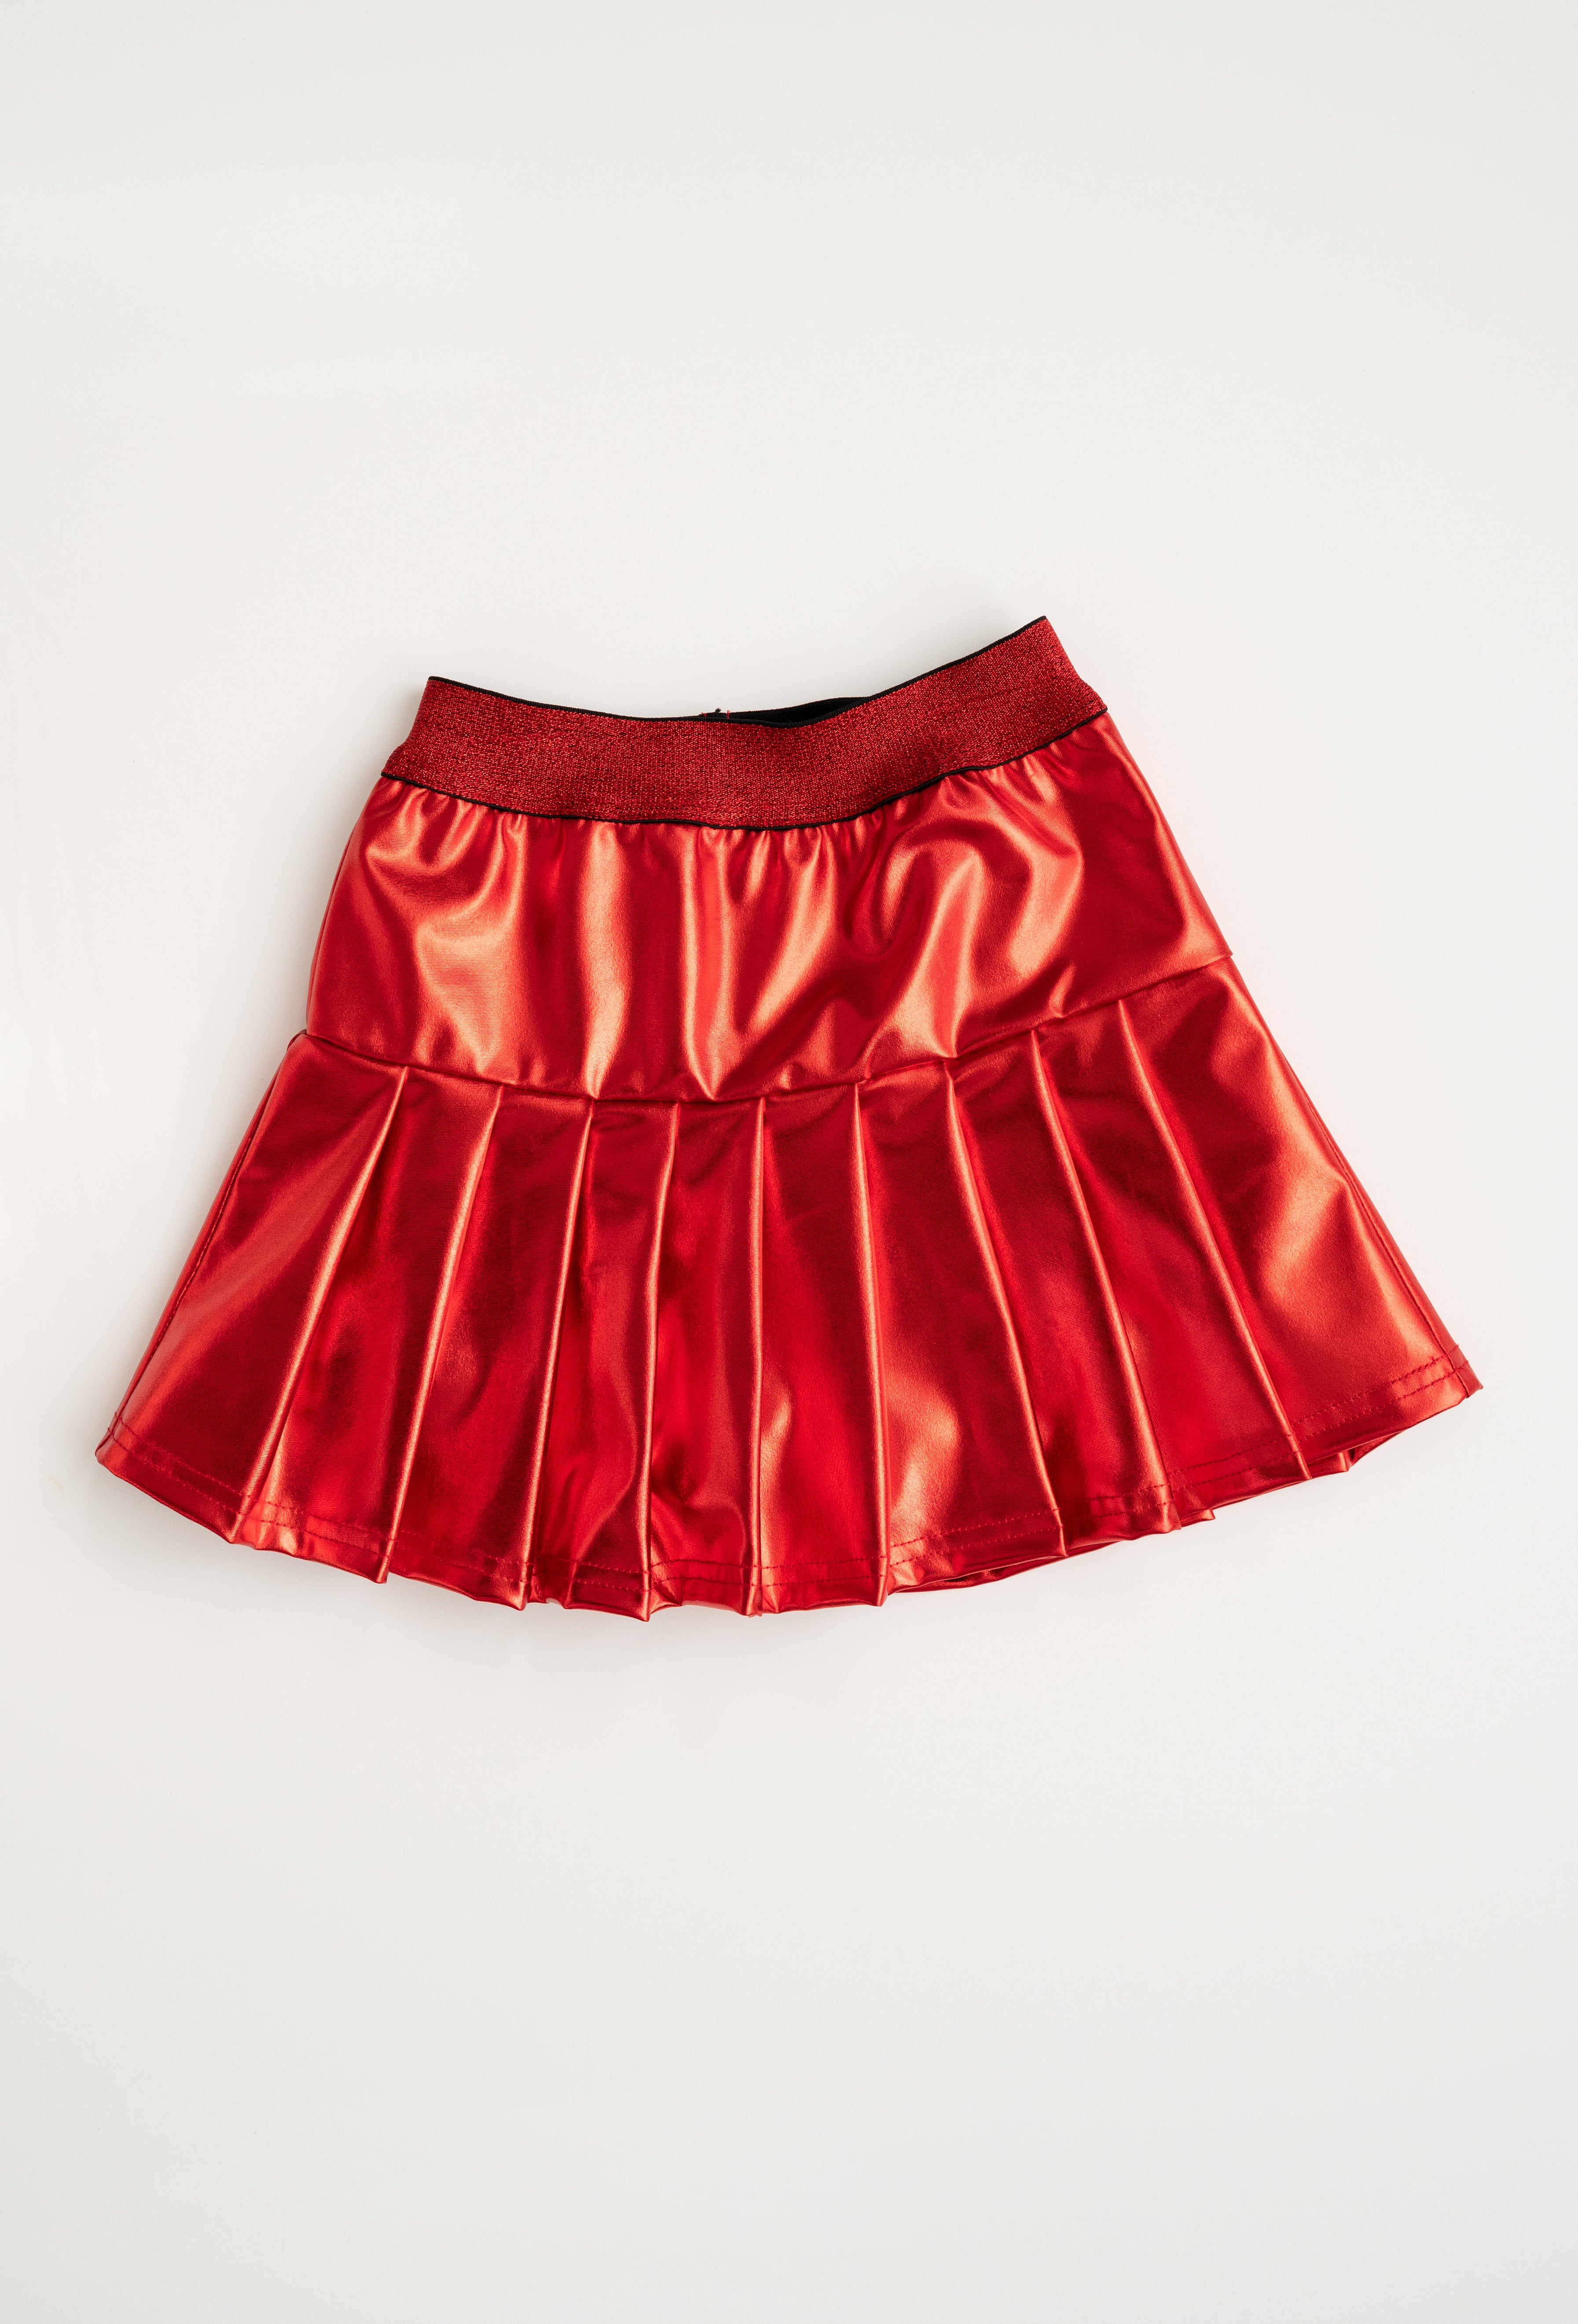 Red Metallic Skort - Evie's Closet Clothing